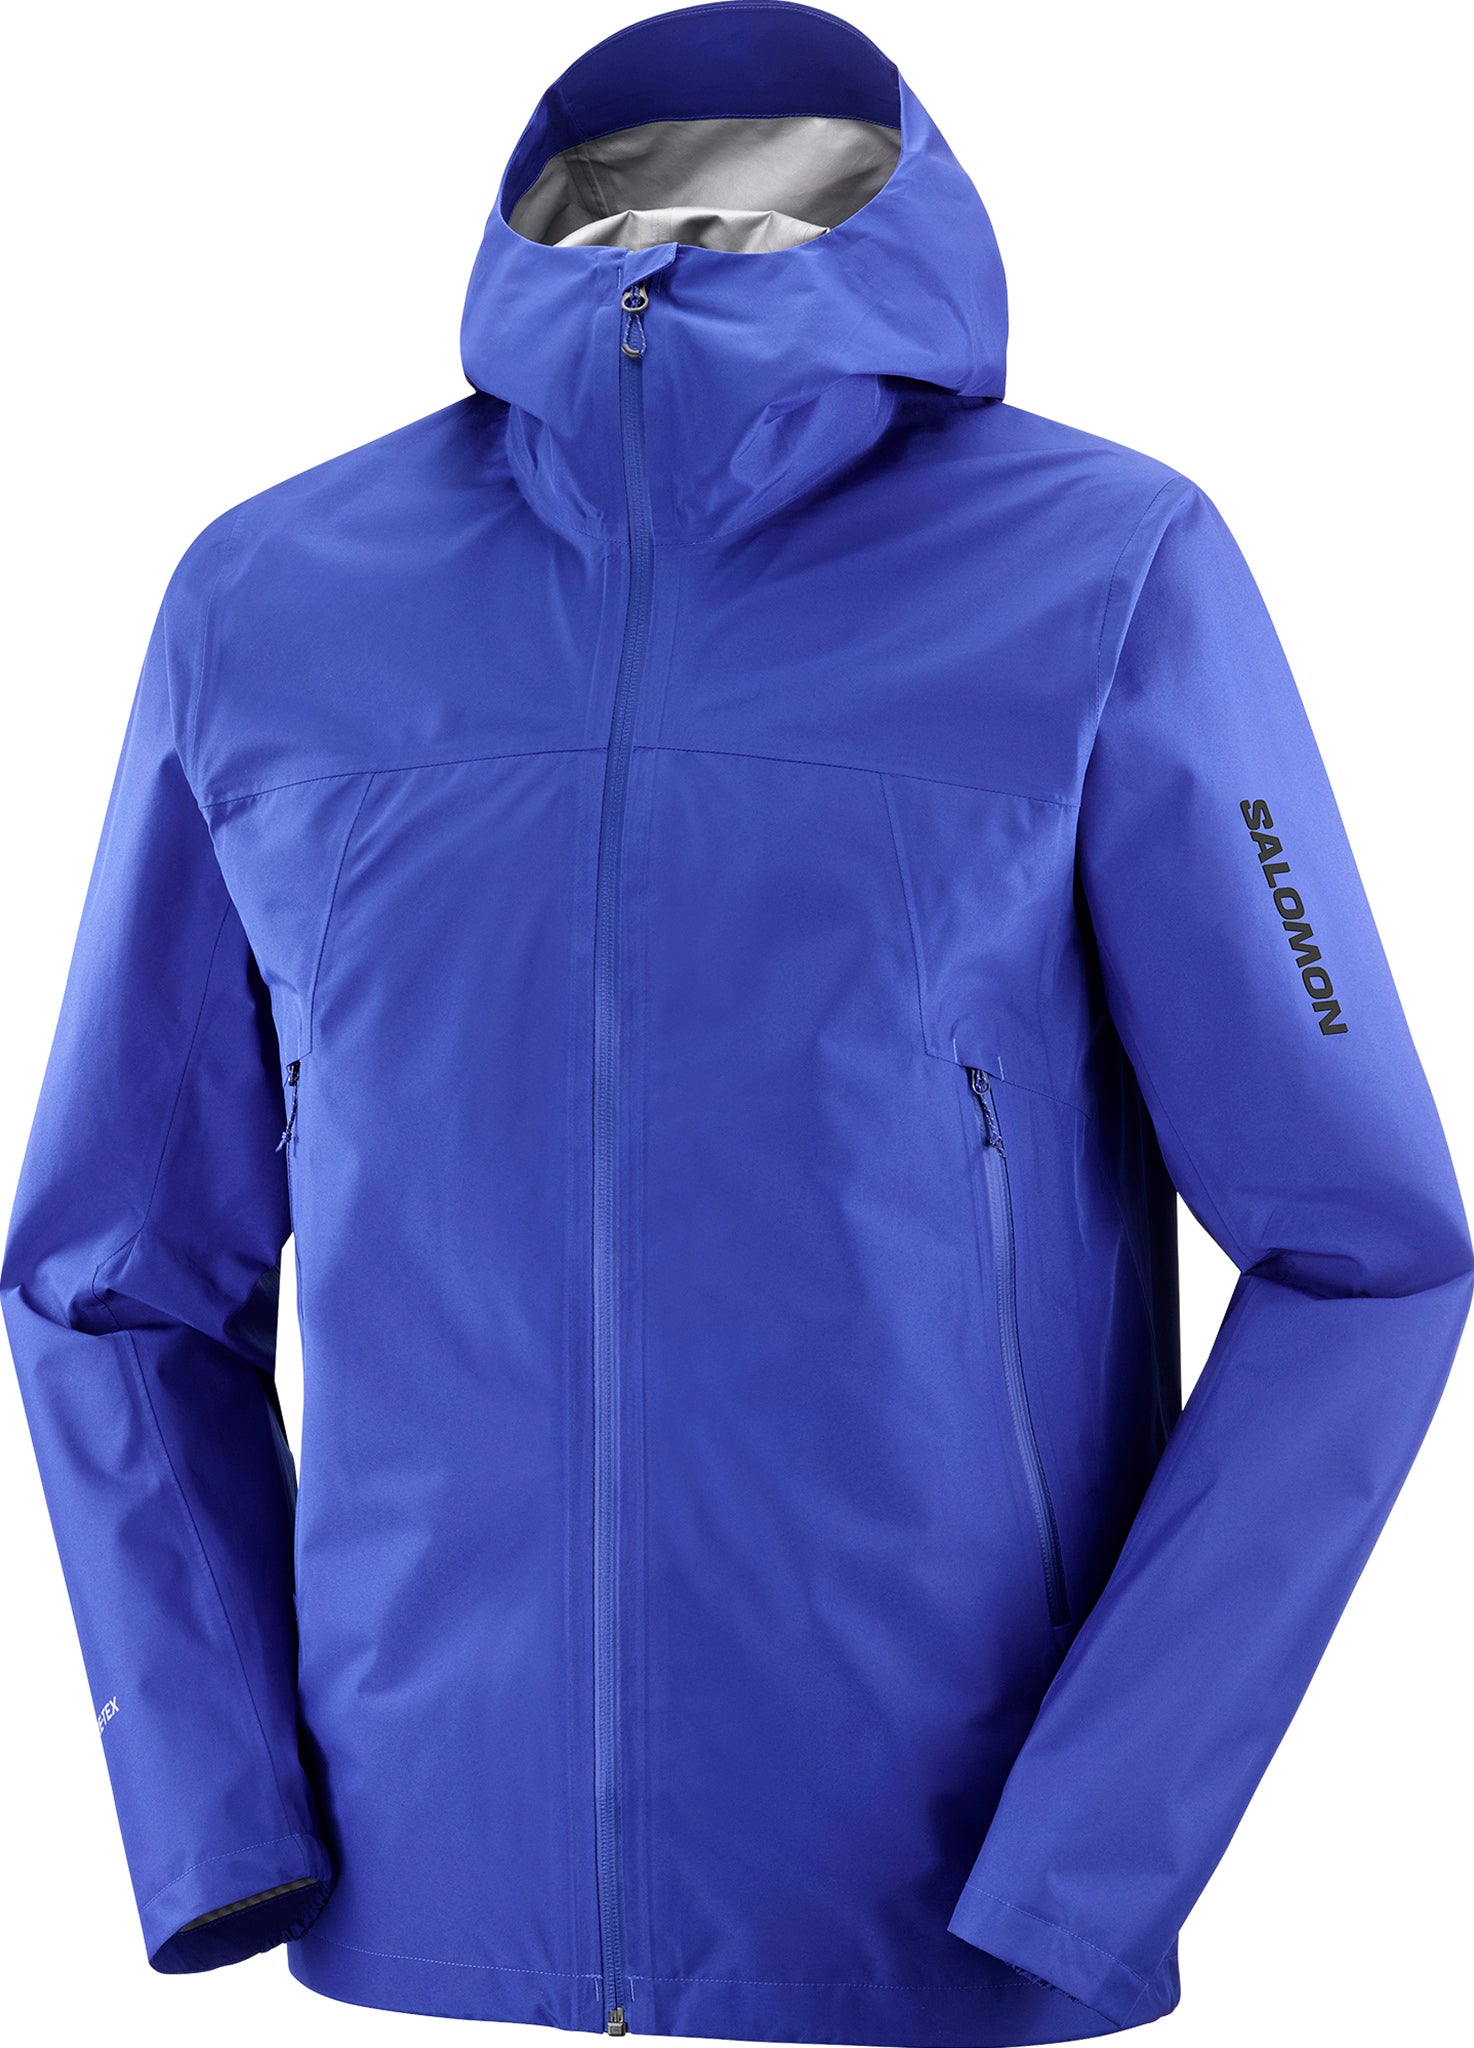 Salomon Outline GORE-TEX 2.5 Layer Shell Jacket - Men's | Altitude Sports